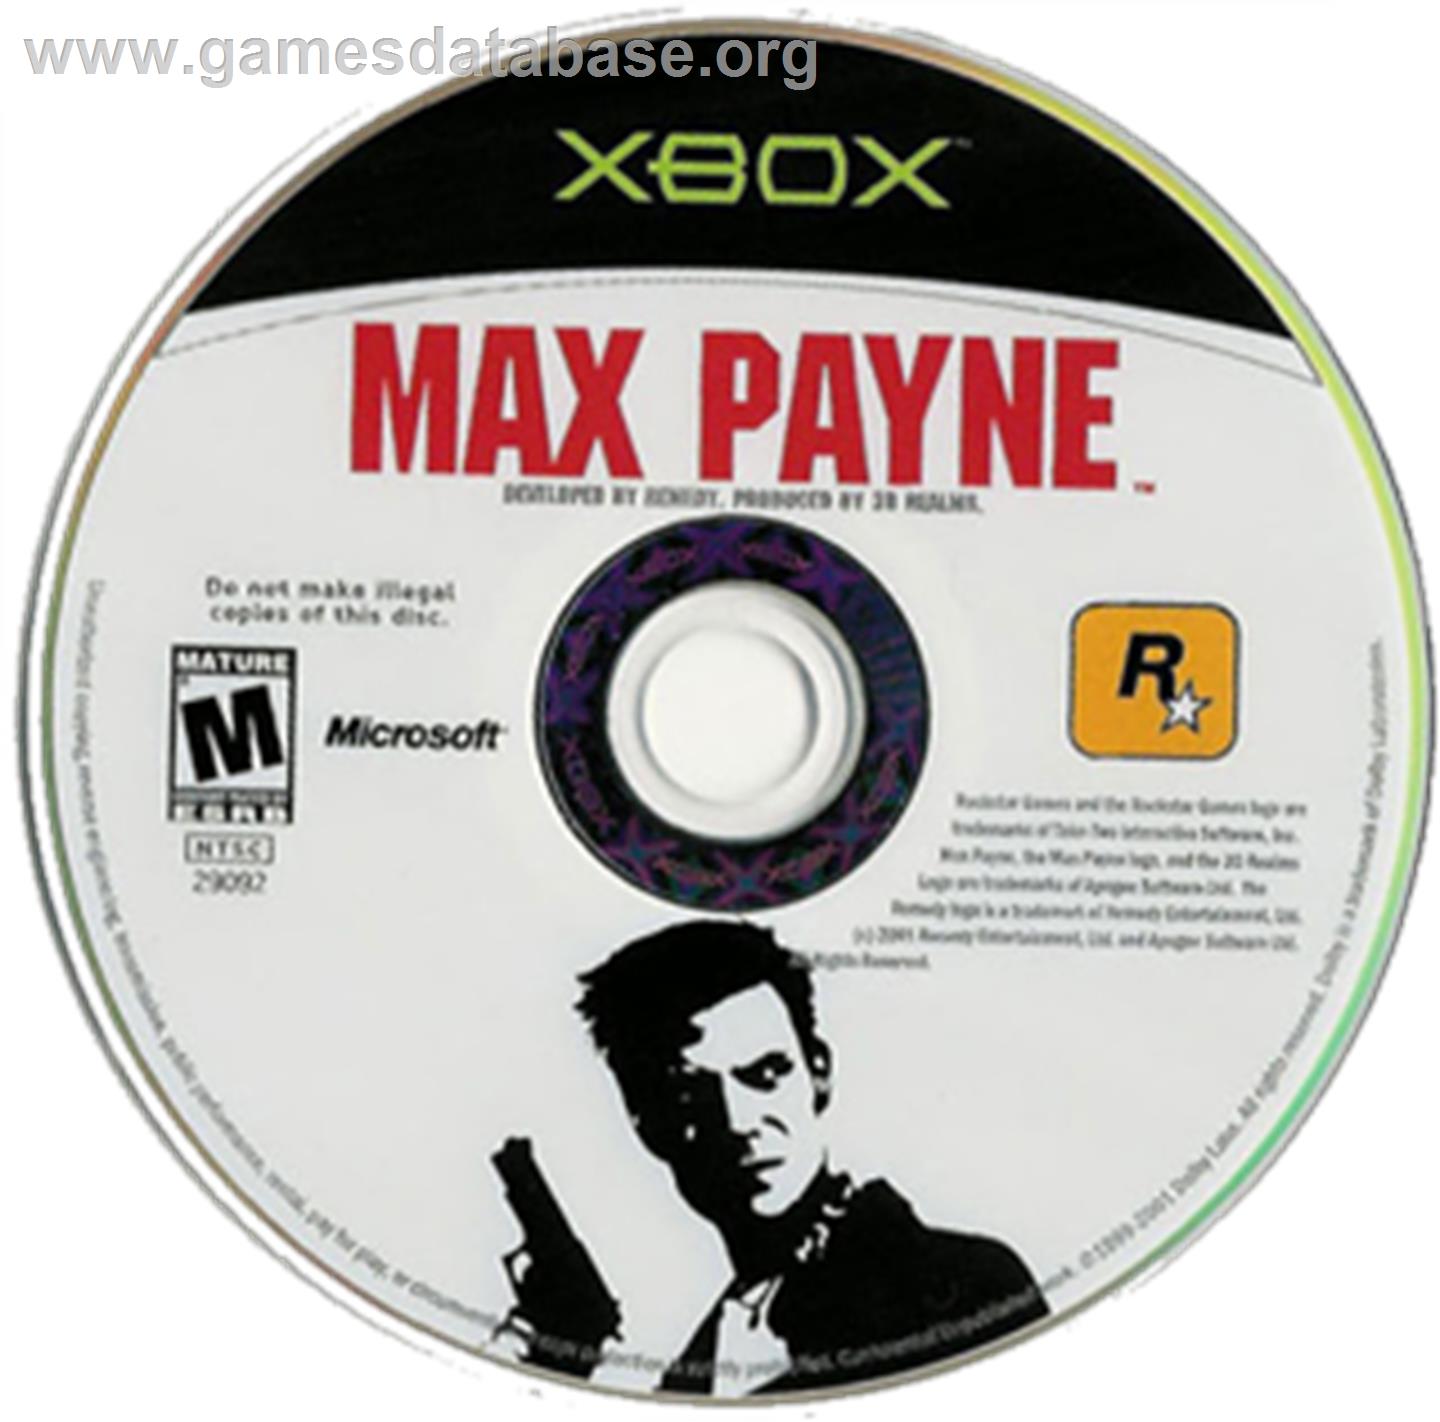 Max Payne - Microsoft Xbox - Artwork - CD